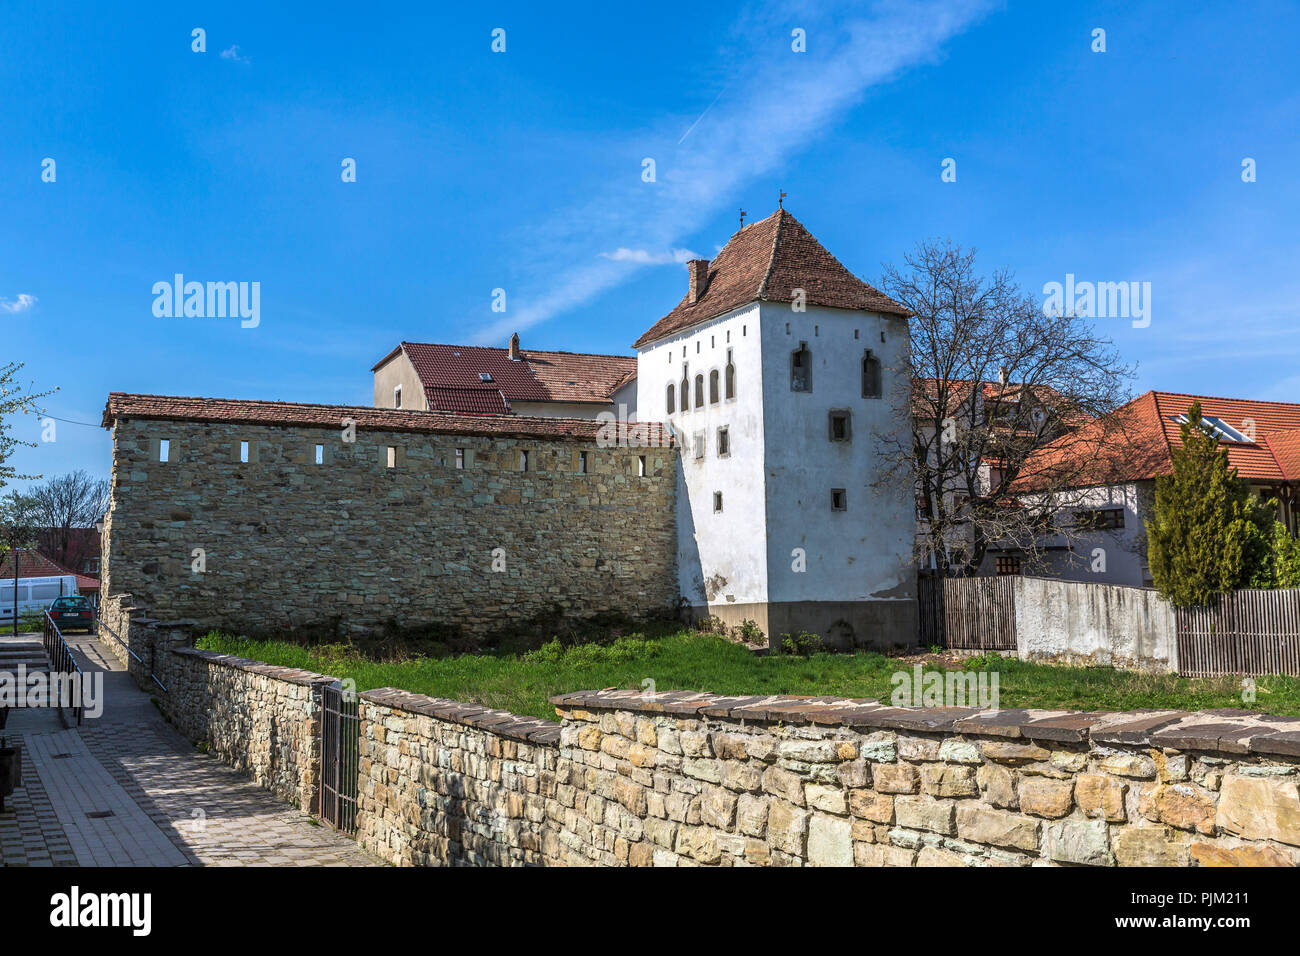 Barrel tower, Turnul Dogarilor, built in the 15th century, Bistrita, Bistrita, Beszterce, Transylvania, Romania, Europe Stock Photo